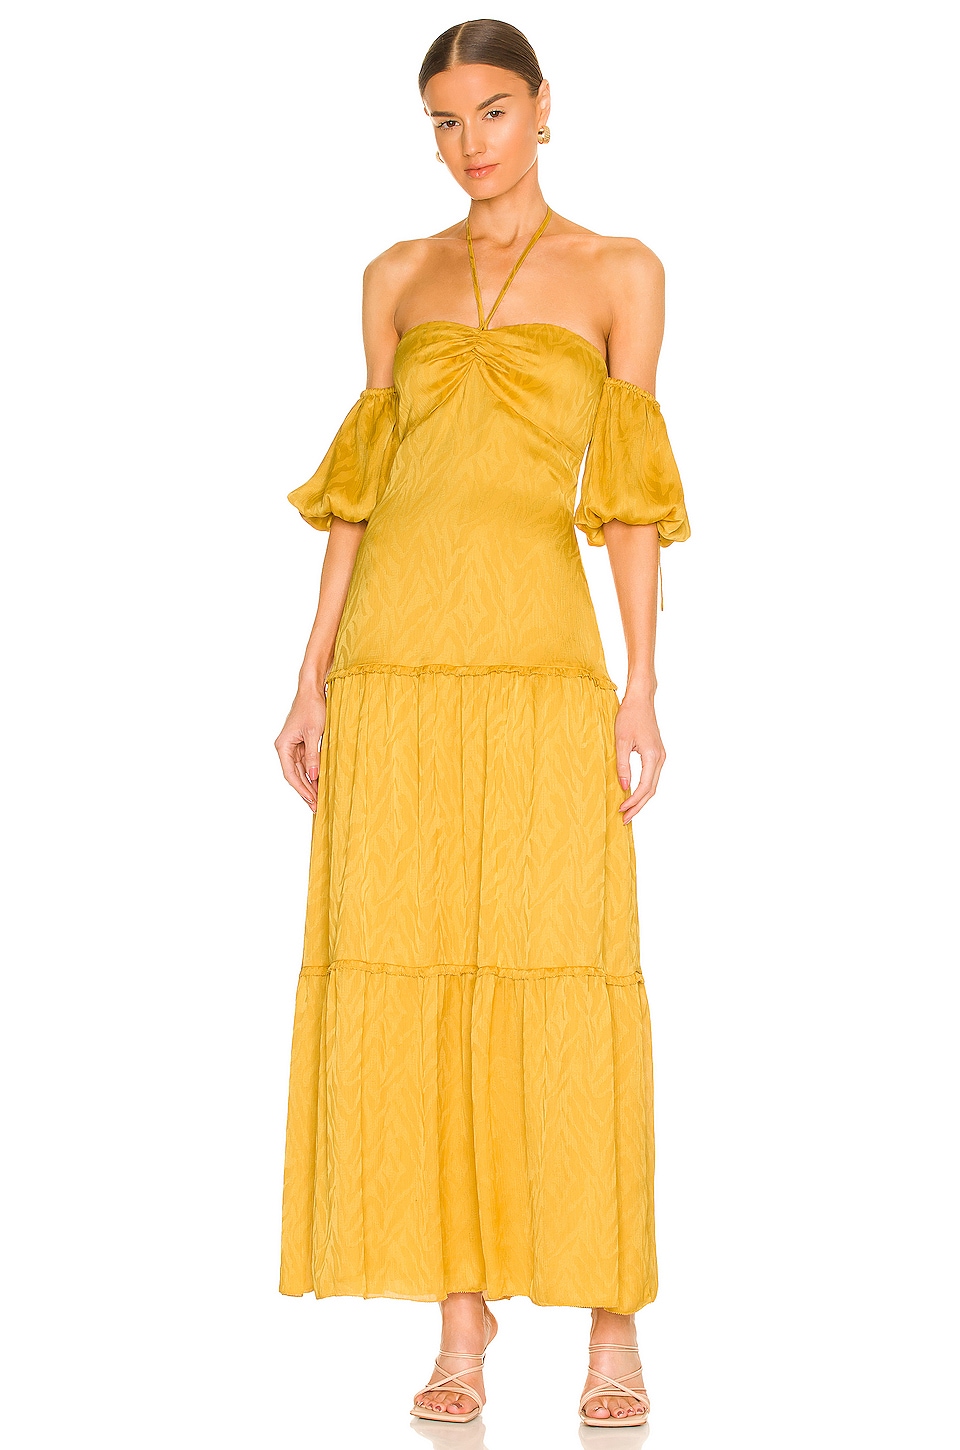 House of Harlow 1960 x REVOLVE Aureliene Maxi Dress in Gold | REVOLVE